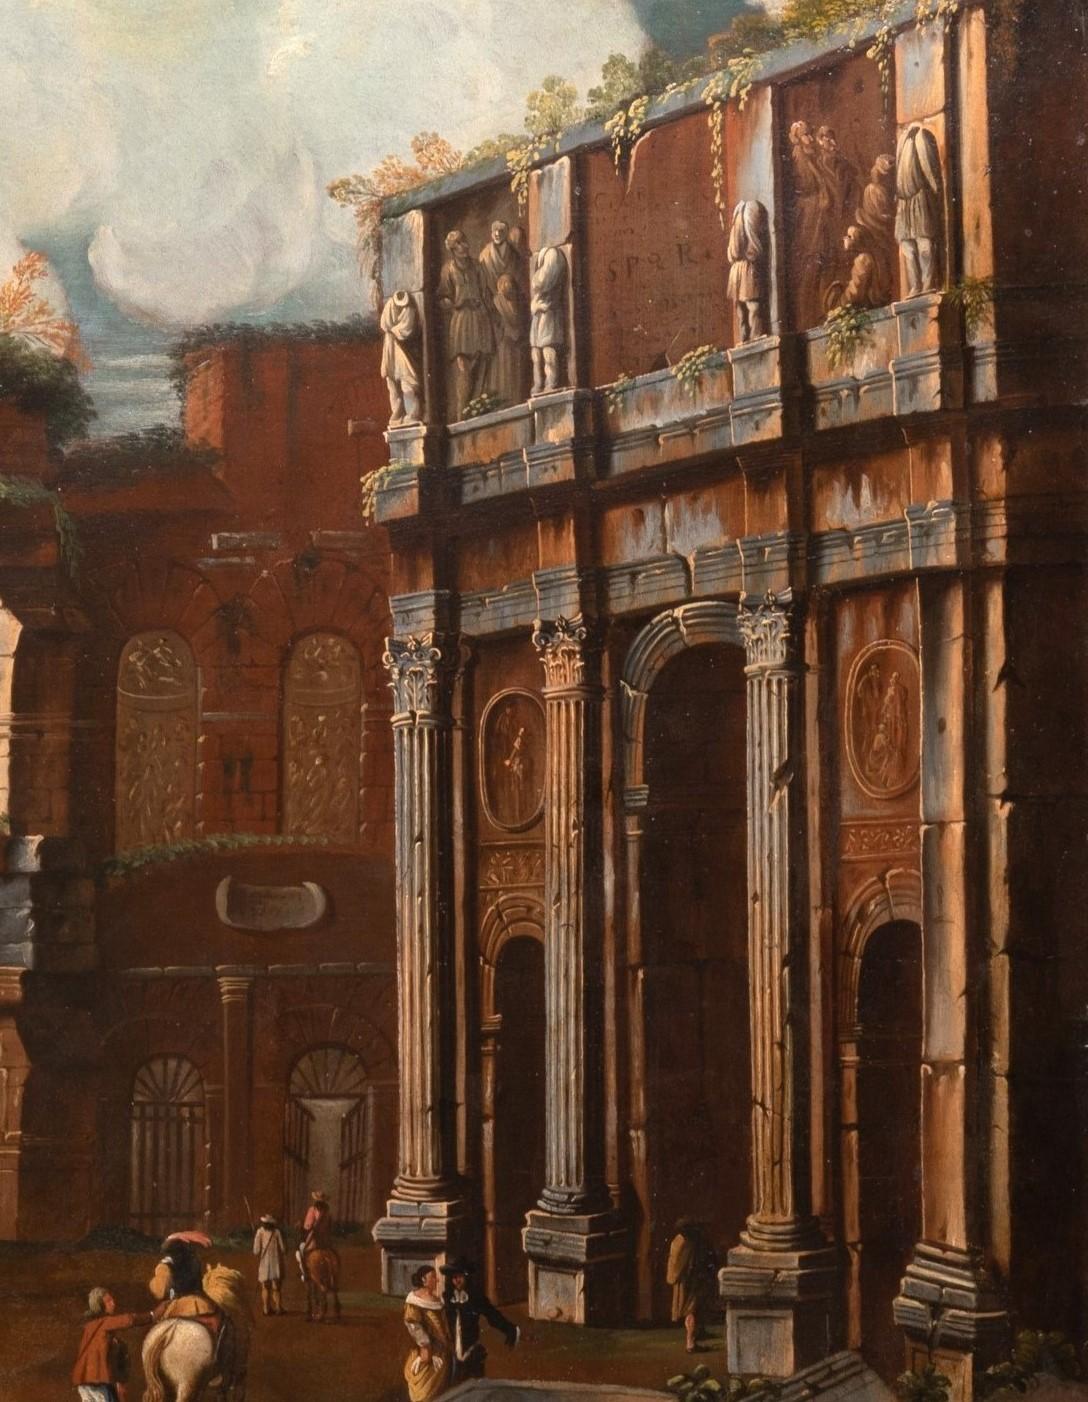 A 17th c. Italian school, Capriccio with the Colosseum, circle of V. Codazzi - Old Masters Painting by Viviano Codazzi